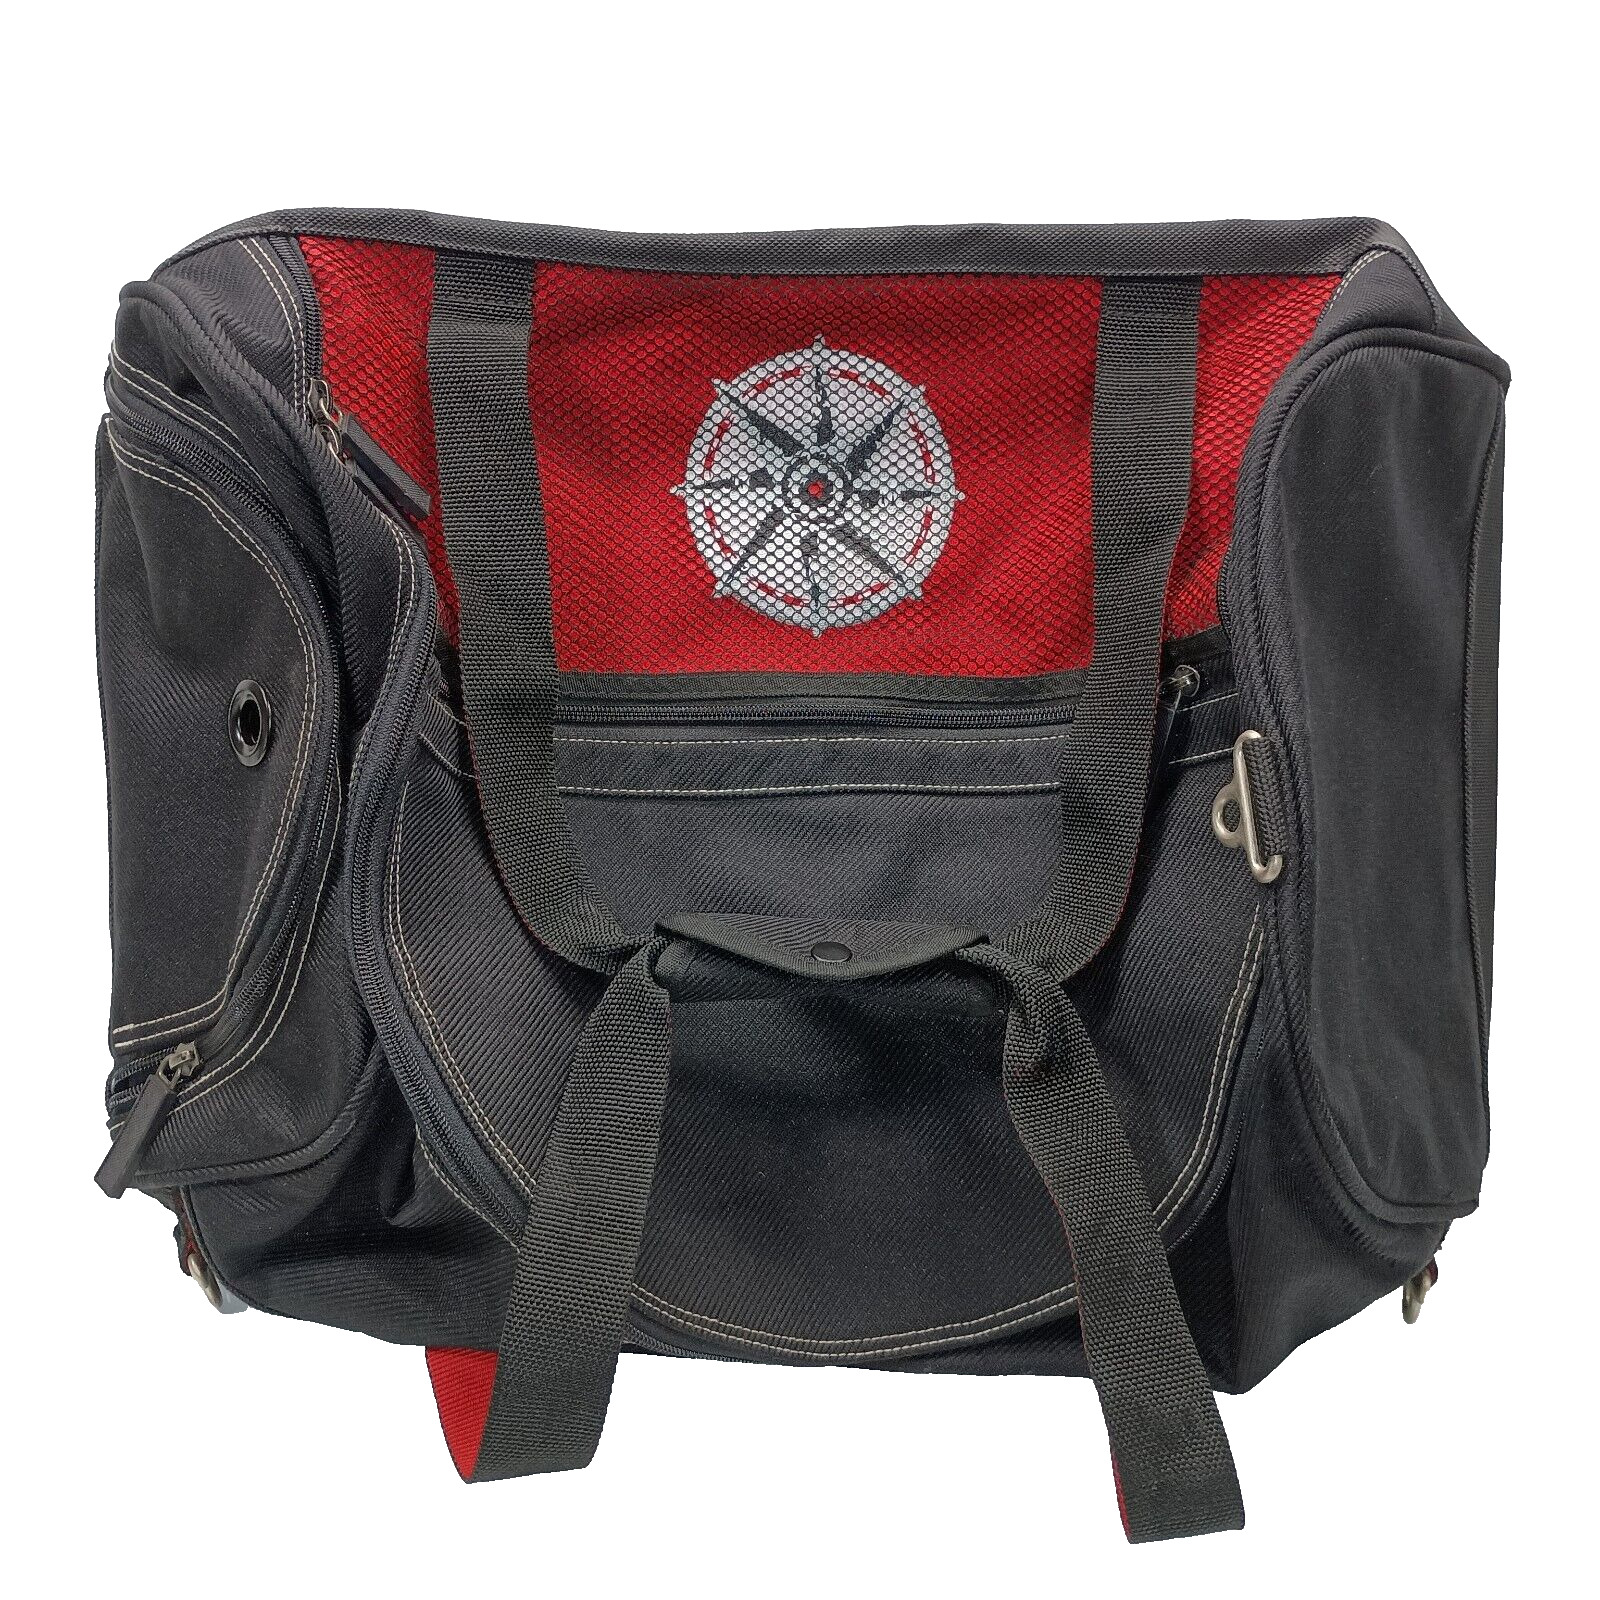 Unused Marlboro Adventure Team Compass Red Black Duffle Sports Gym Travel Bag